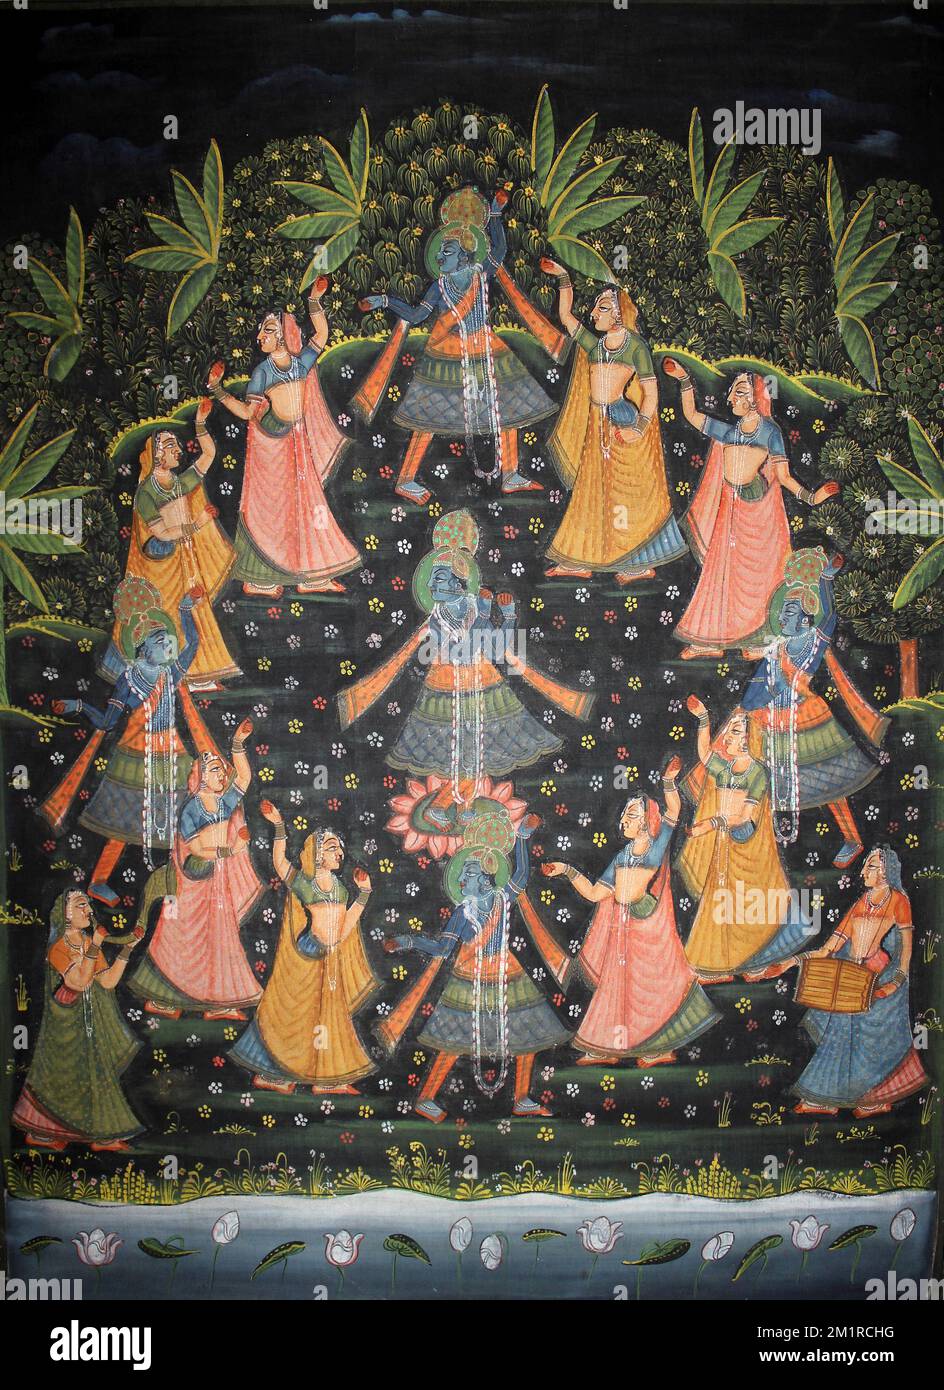 Gujarat Textiles - Dancing Woman Stock Photo